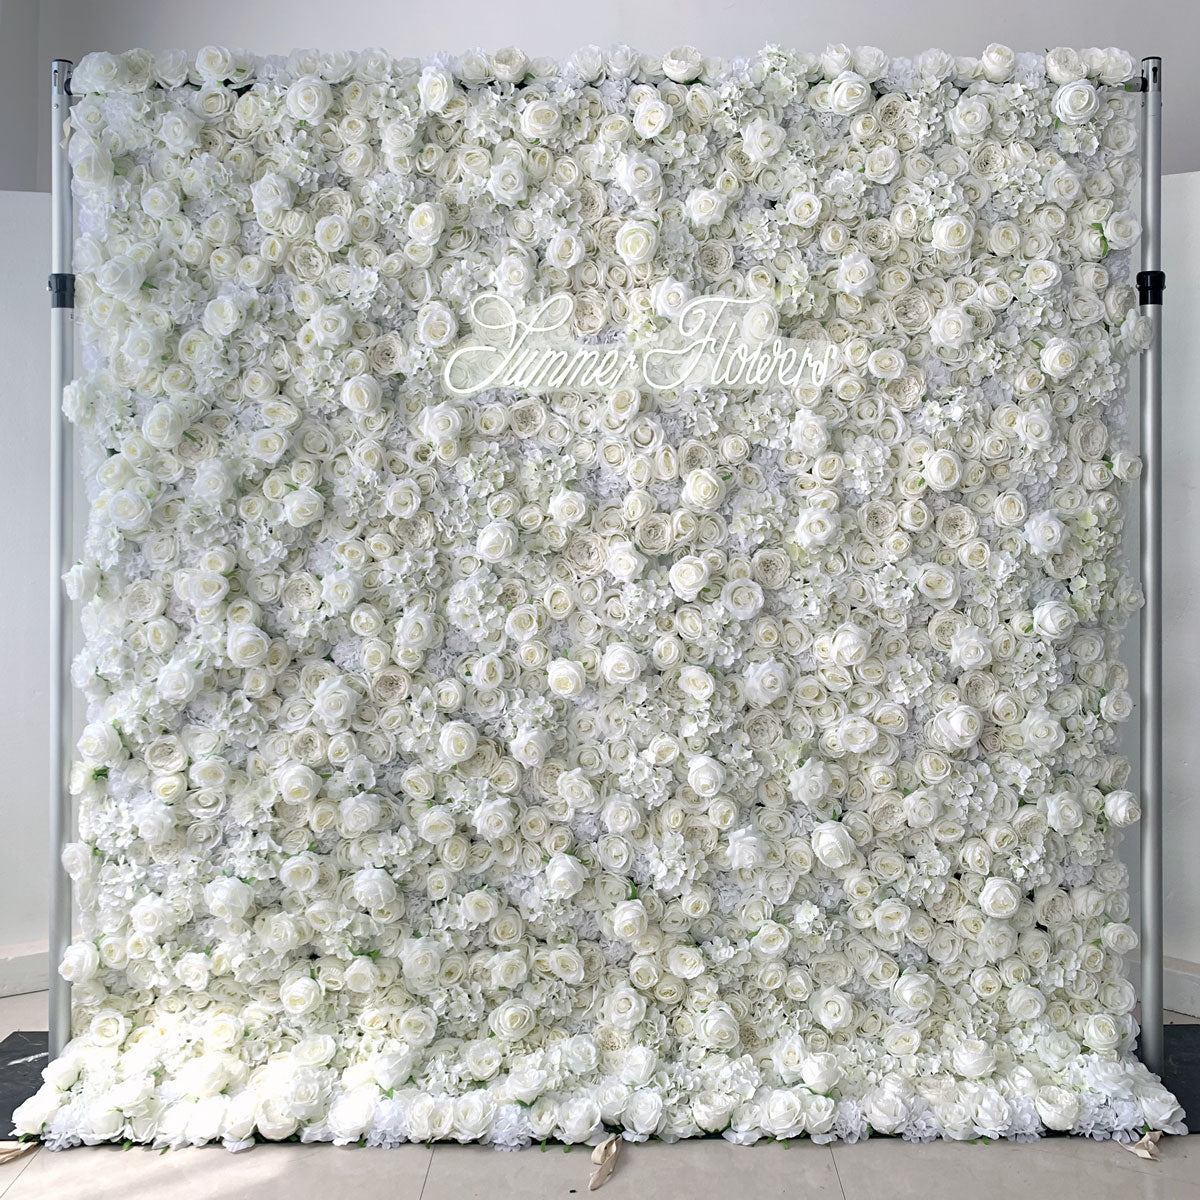 Summer Flower:CB-051 8ft*8ft Cloth Back Artificial Flower Wall Backdrop